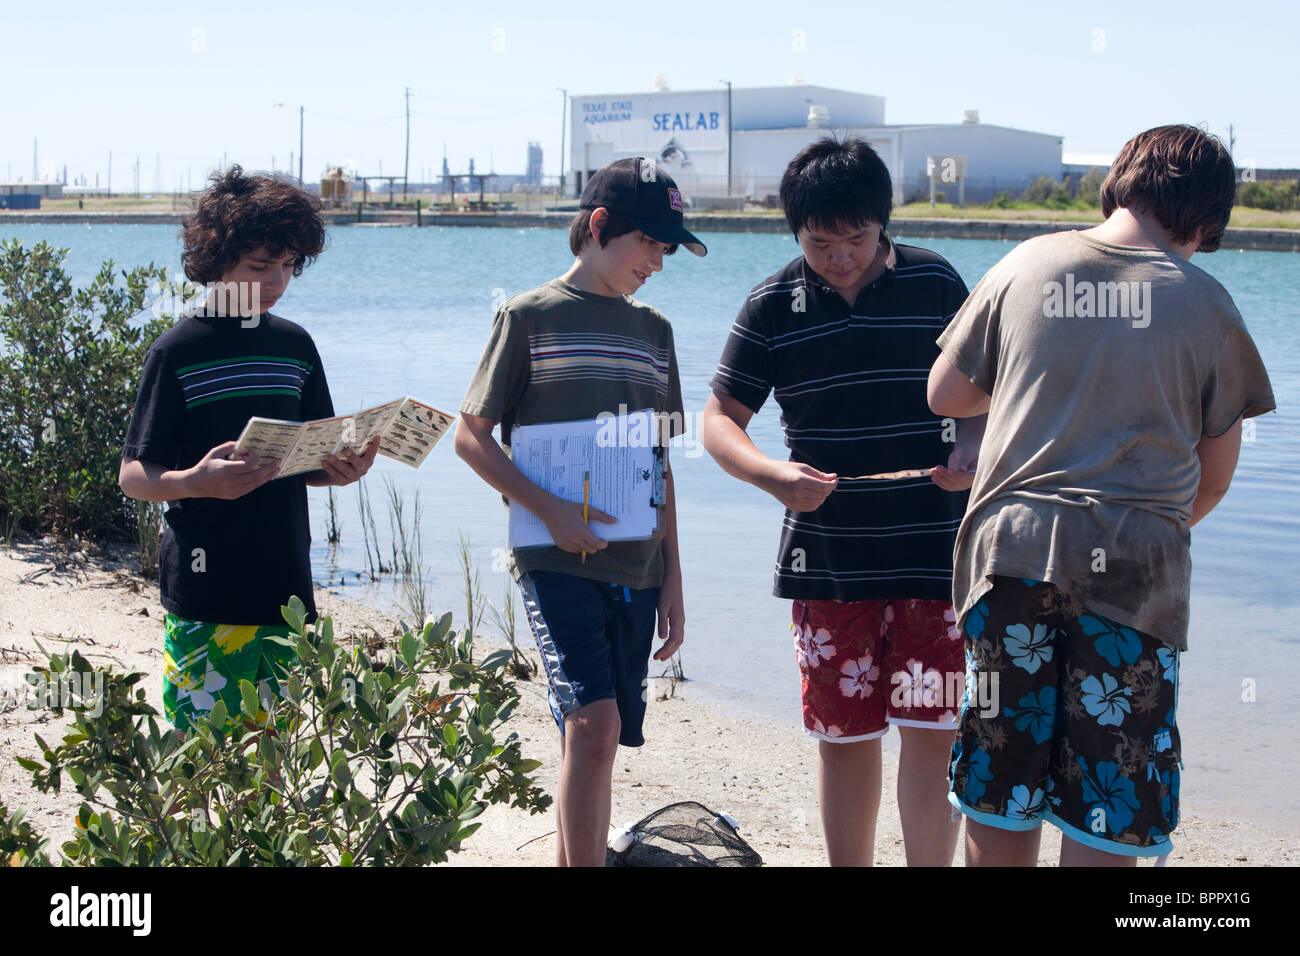 MIddle-school boys identify plant life on beach during marine biology class field trip near Corpus Christi, Texas Stock Photo